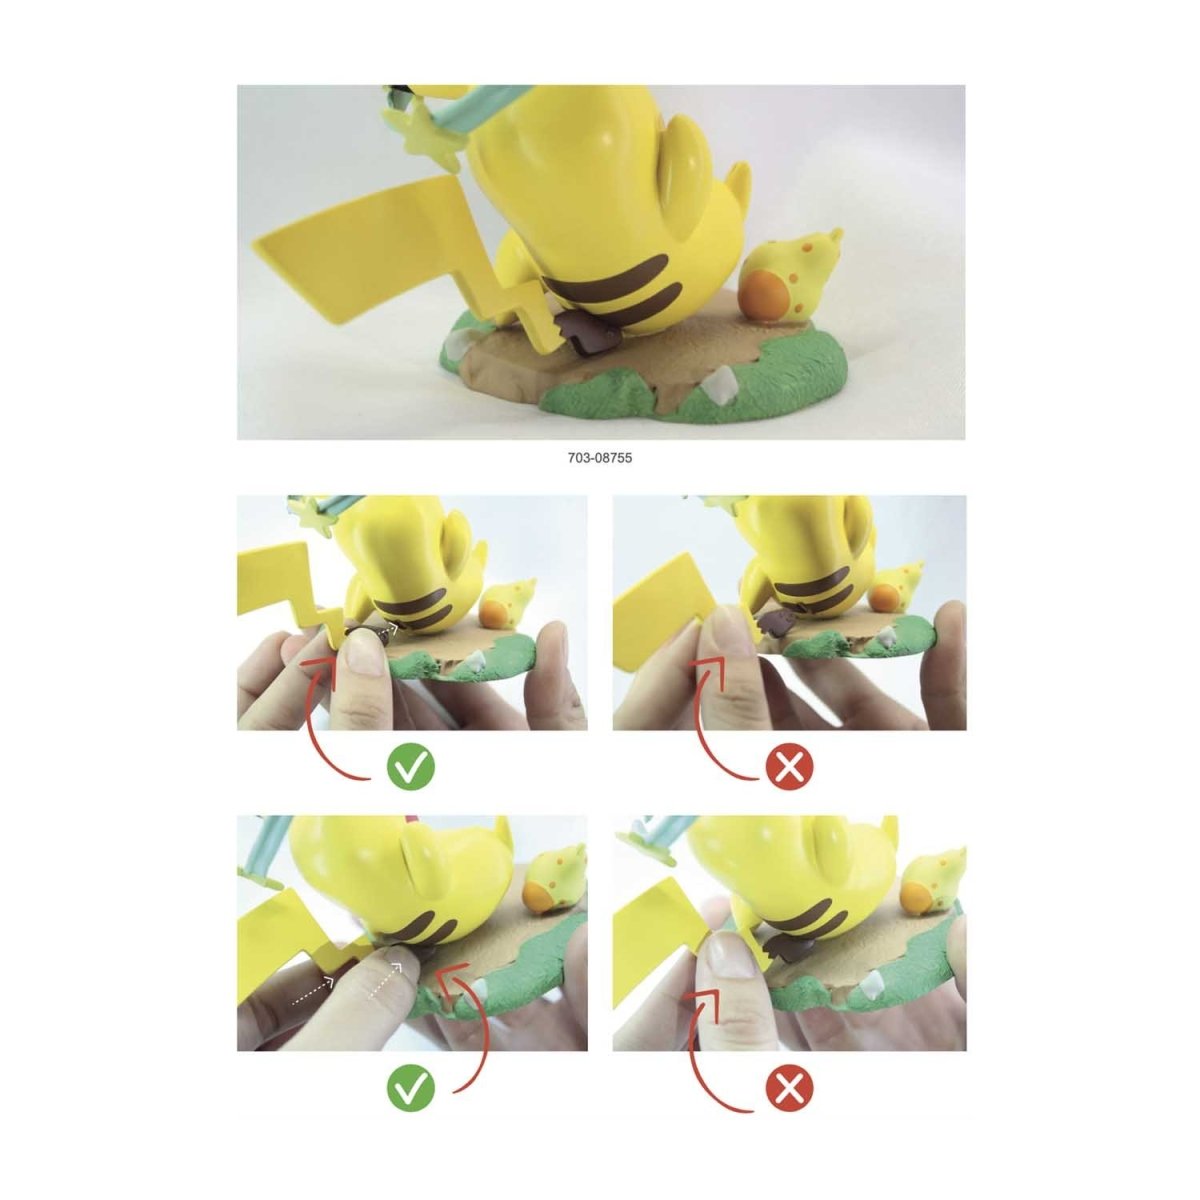 Surfing Pikachu Pokemon 4 figurine  Pokemon toys & games at